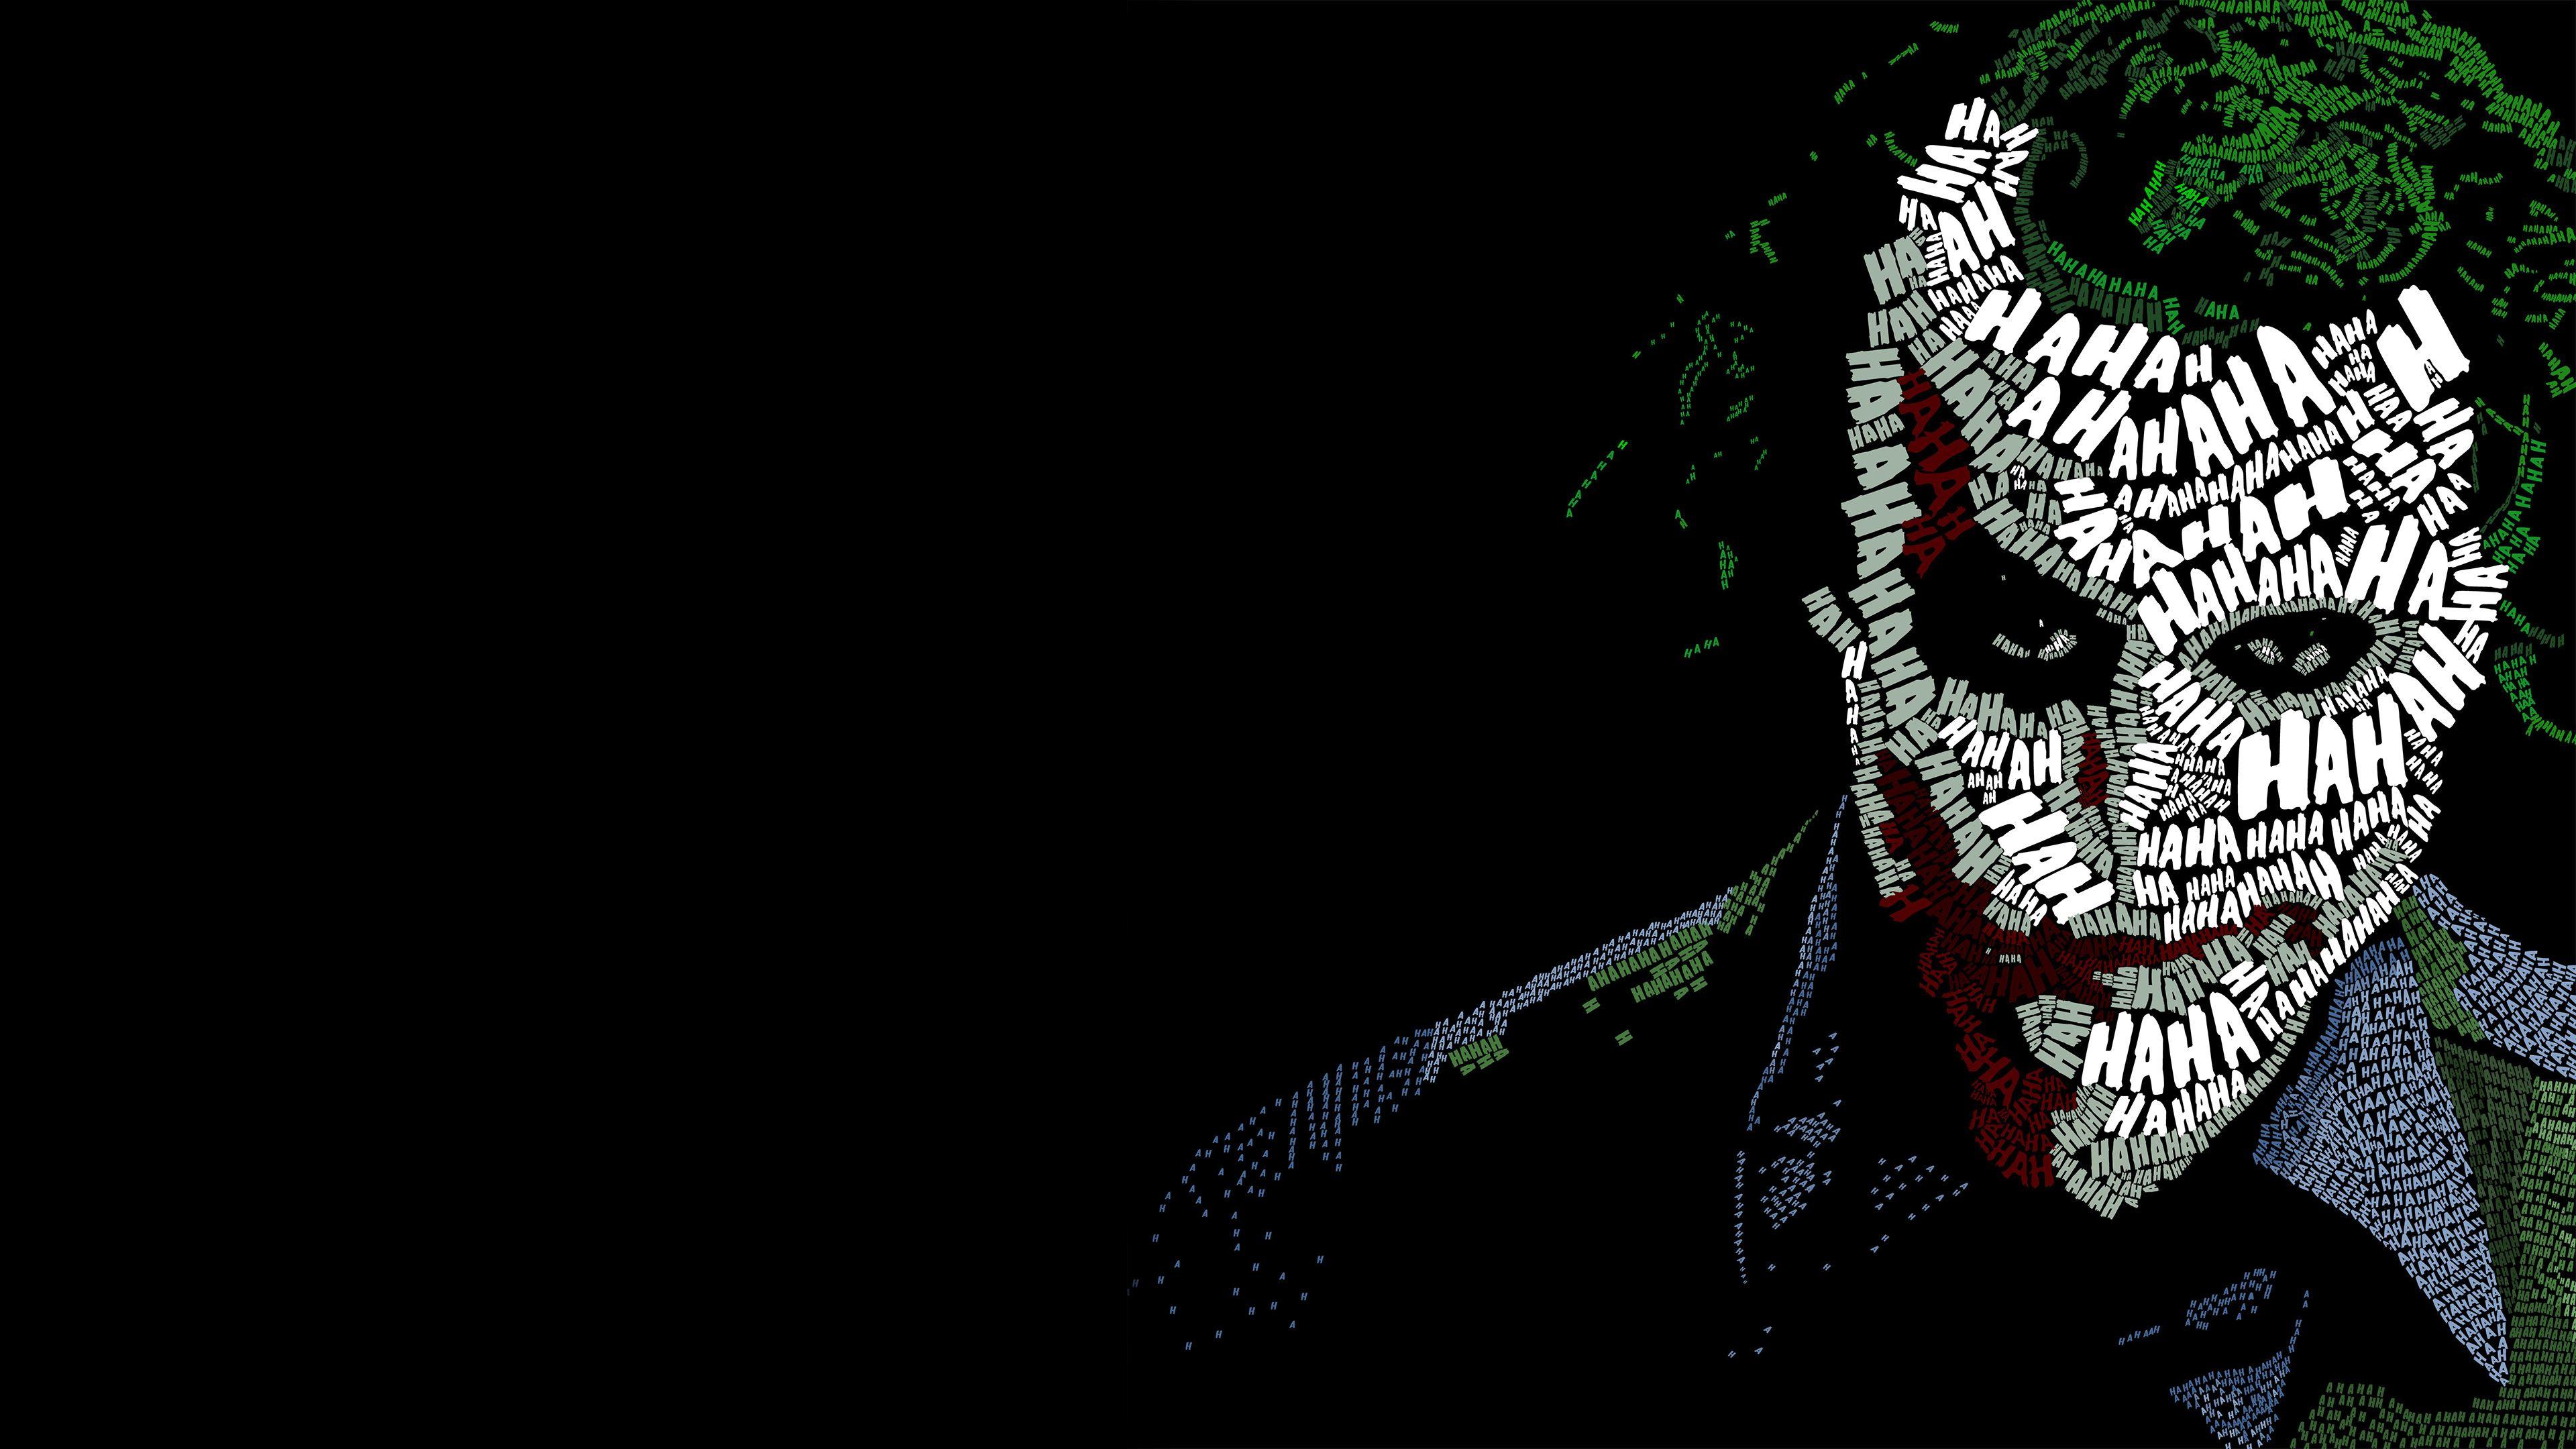 Joker 4k Ultra Wallpapers Top Free Joker 4k Ultra Backgrounds Wallpaperaccess